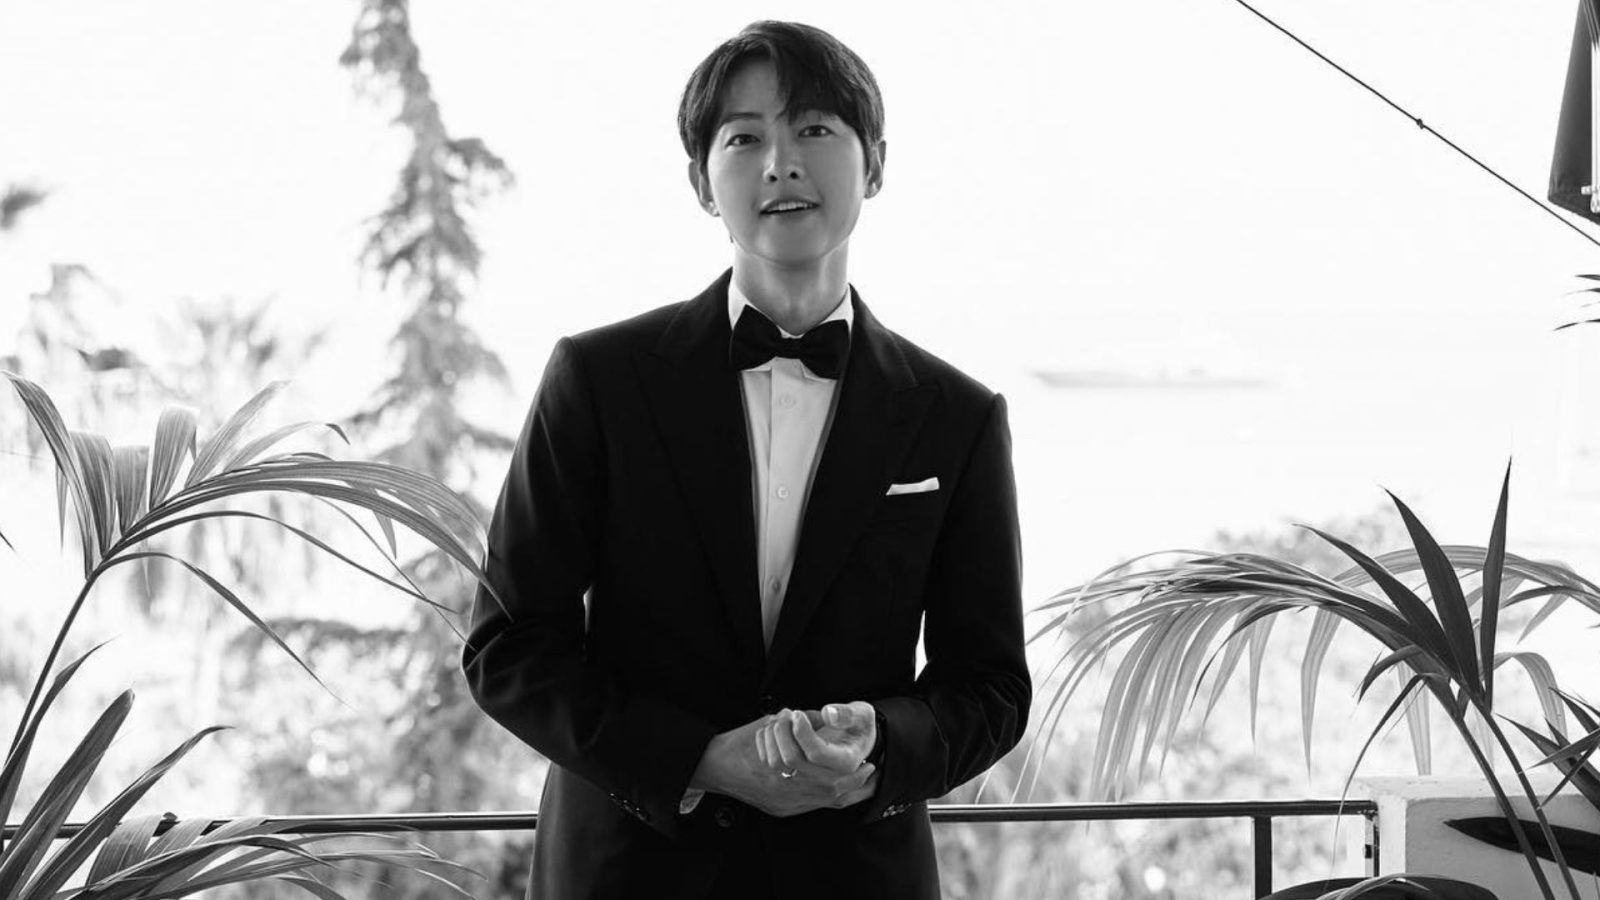 Song Joong Ki is Louis Vuitton's newest house ambassador